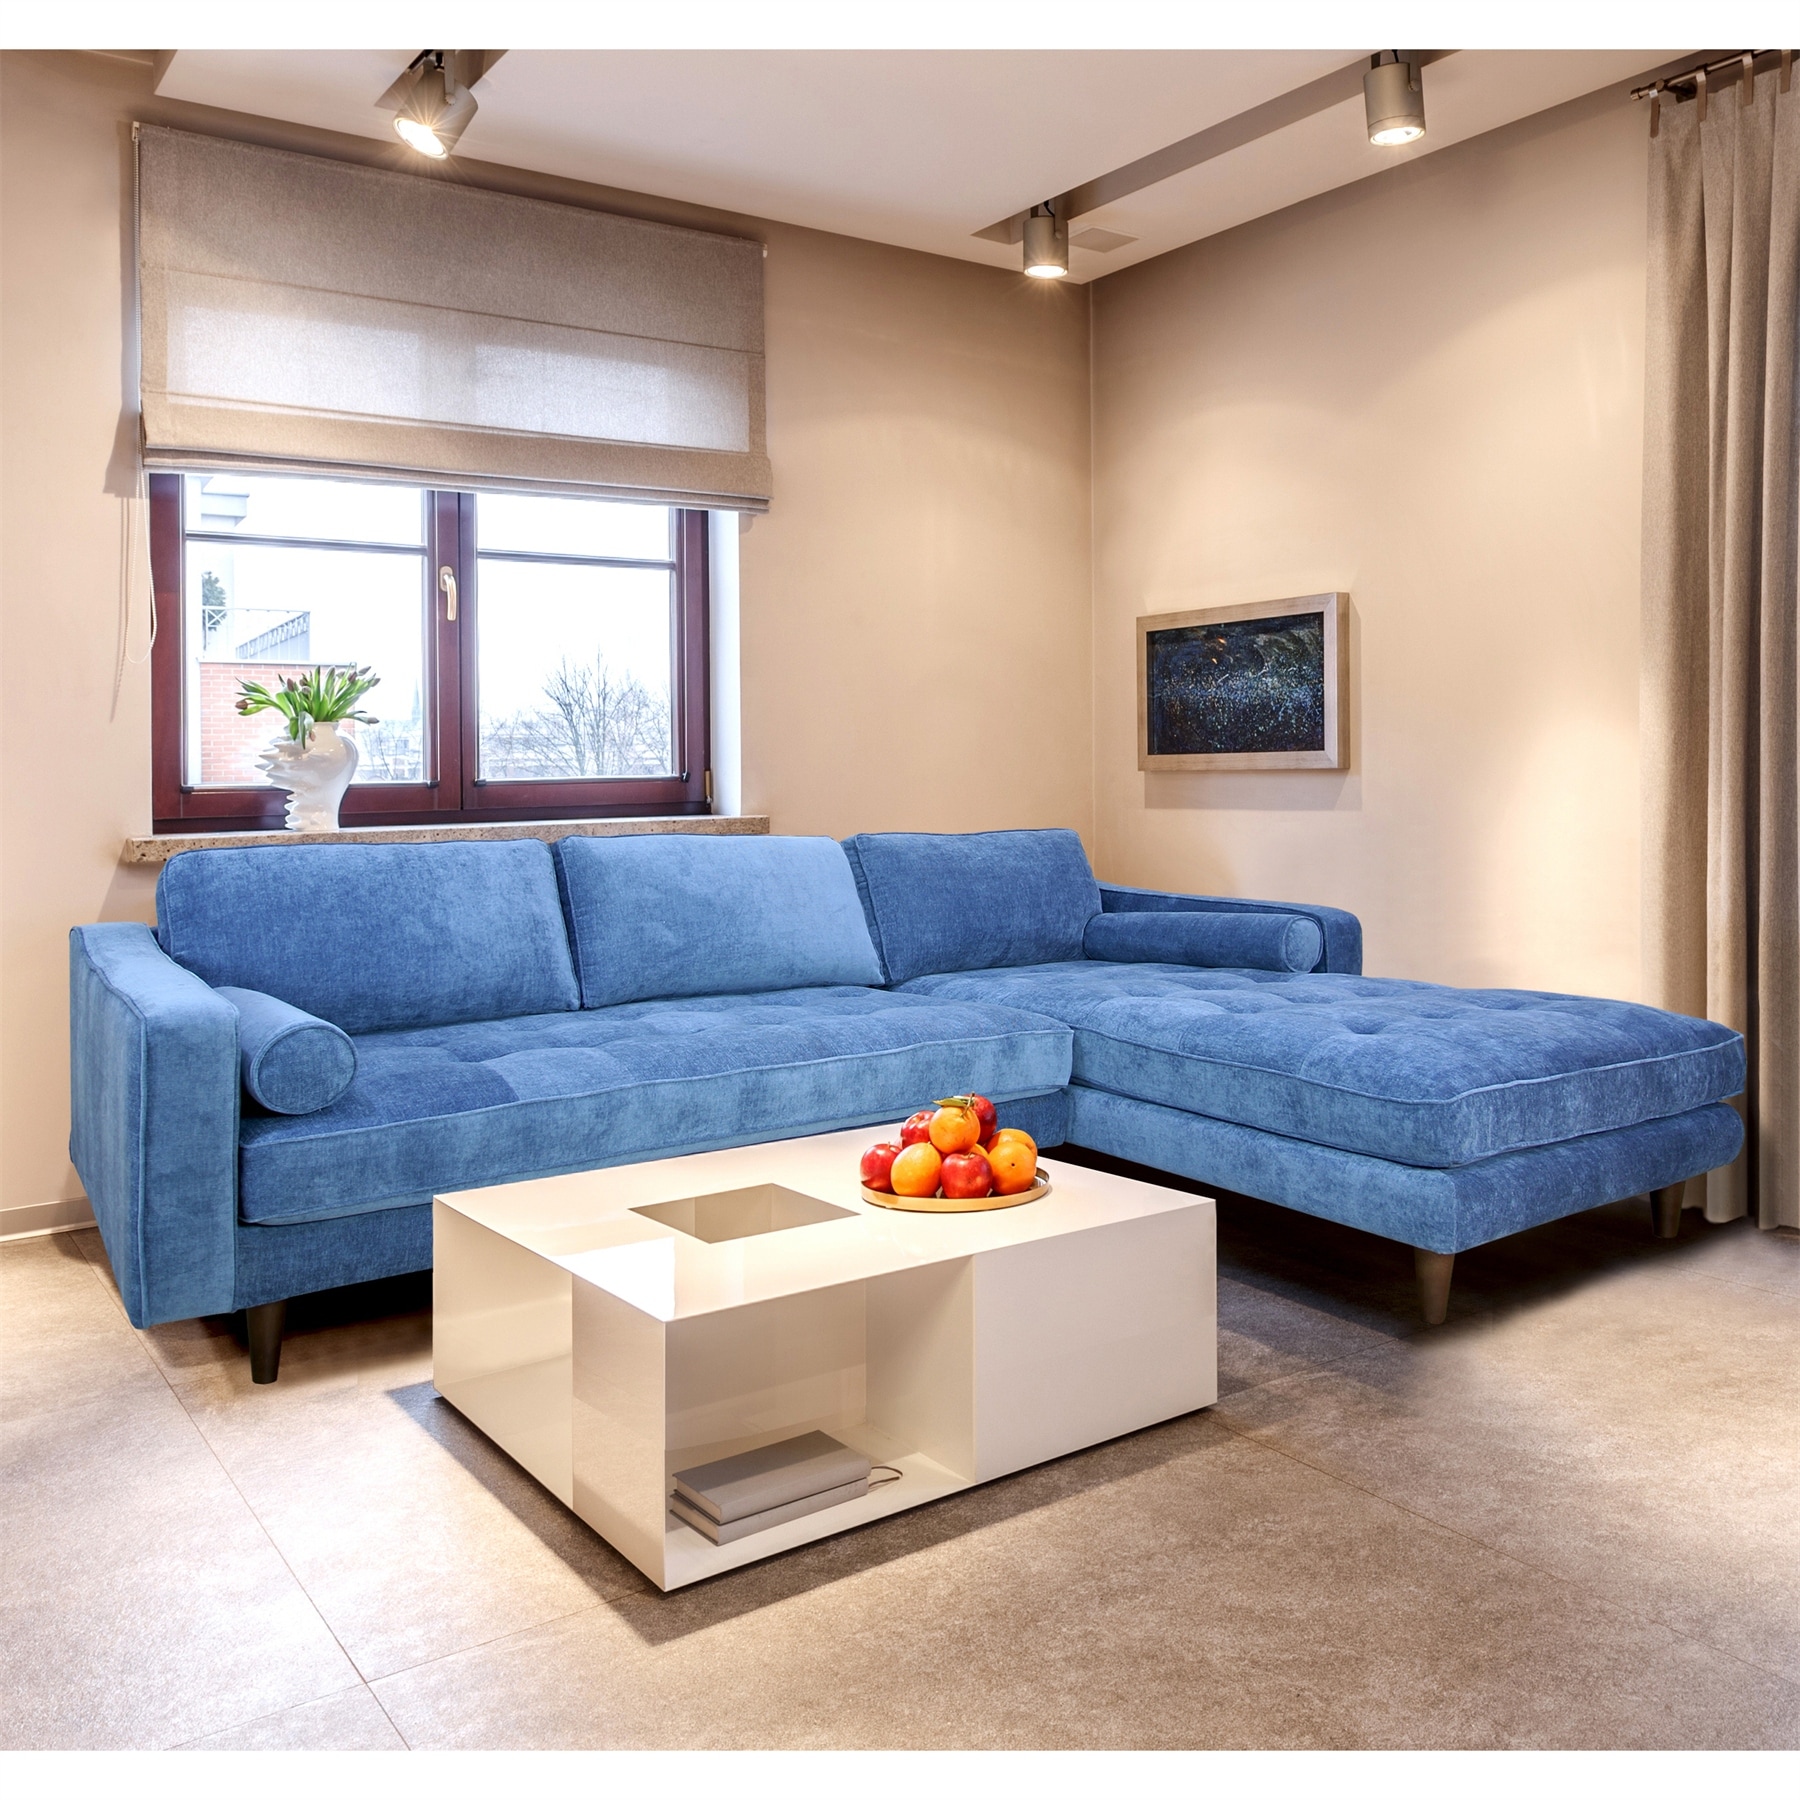 Ashley Furniture Janley Denim Sofa | Mattress furniture, Furniture,  Contemporary sofa